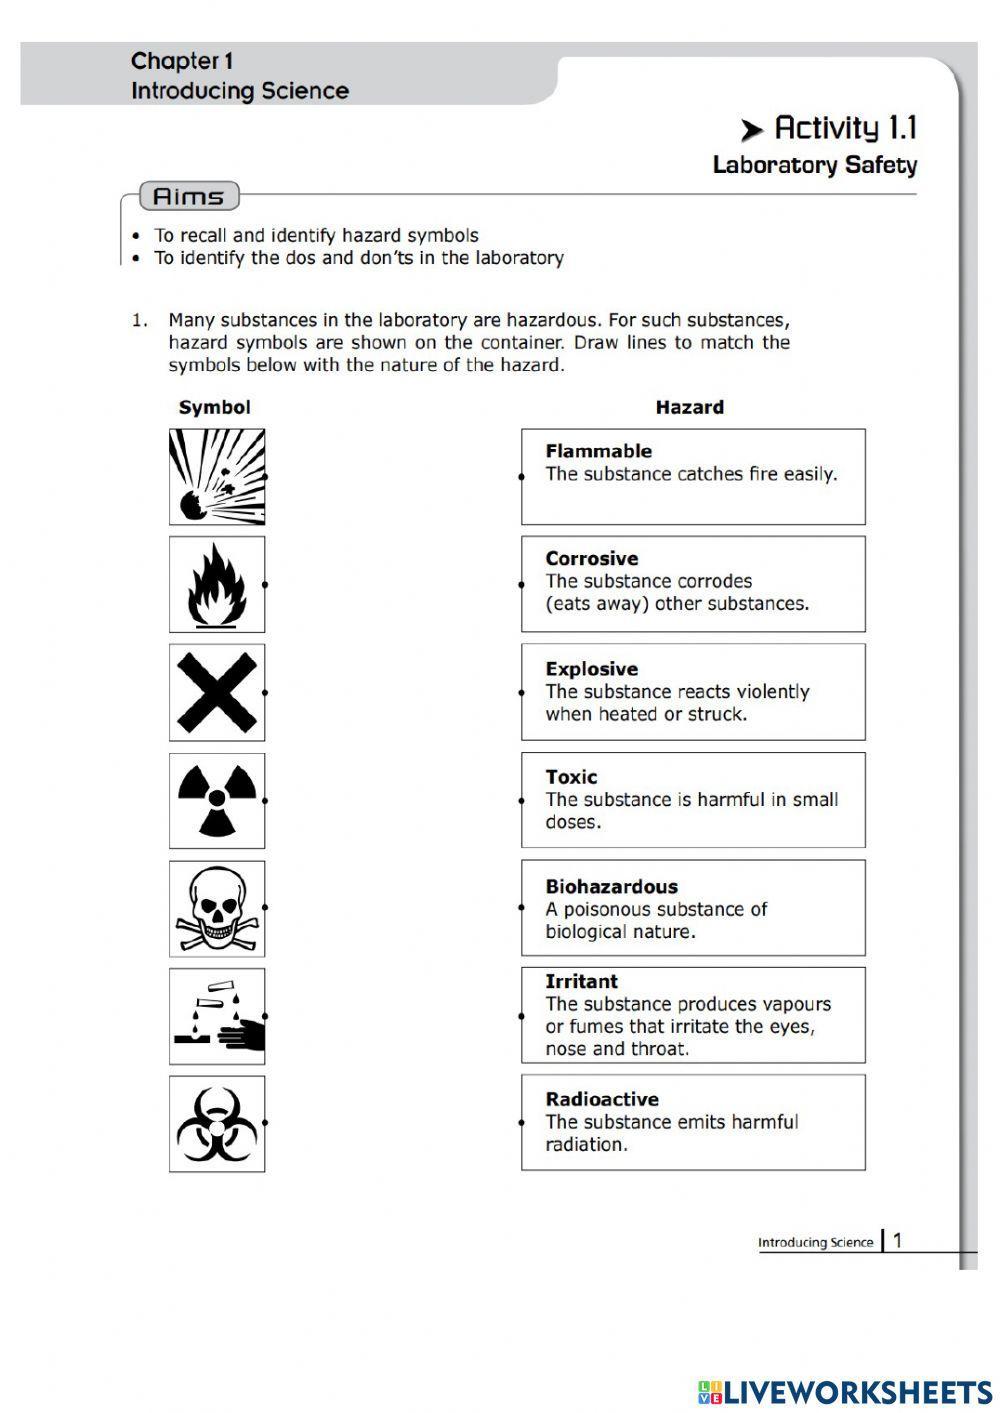 Hazard symbol & Lab Safety Rules